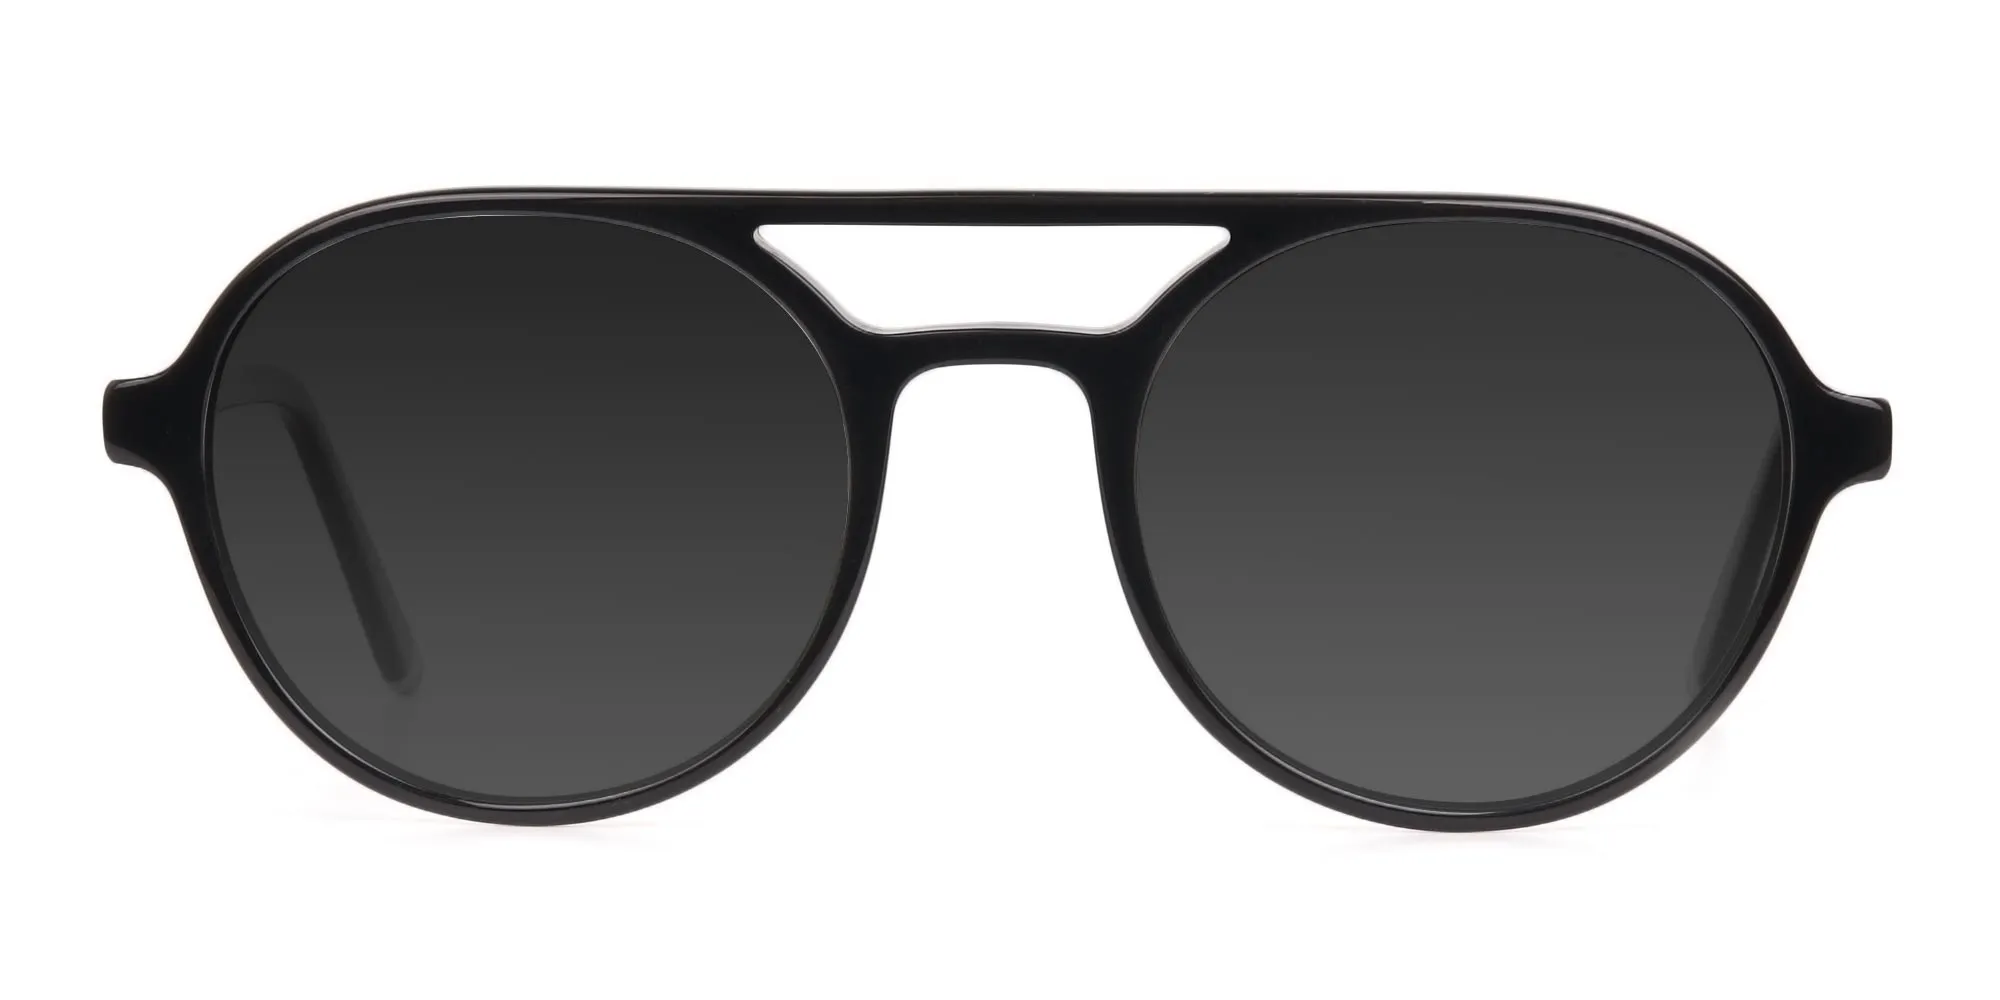 Black Pilot Sunglasses with Dark Grey Lenses - 2 